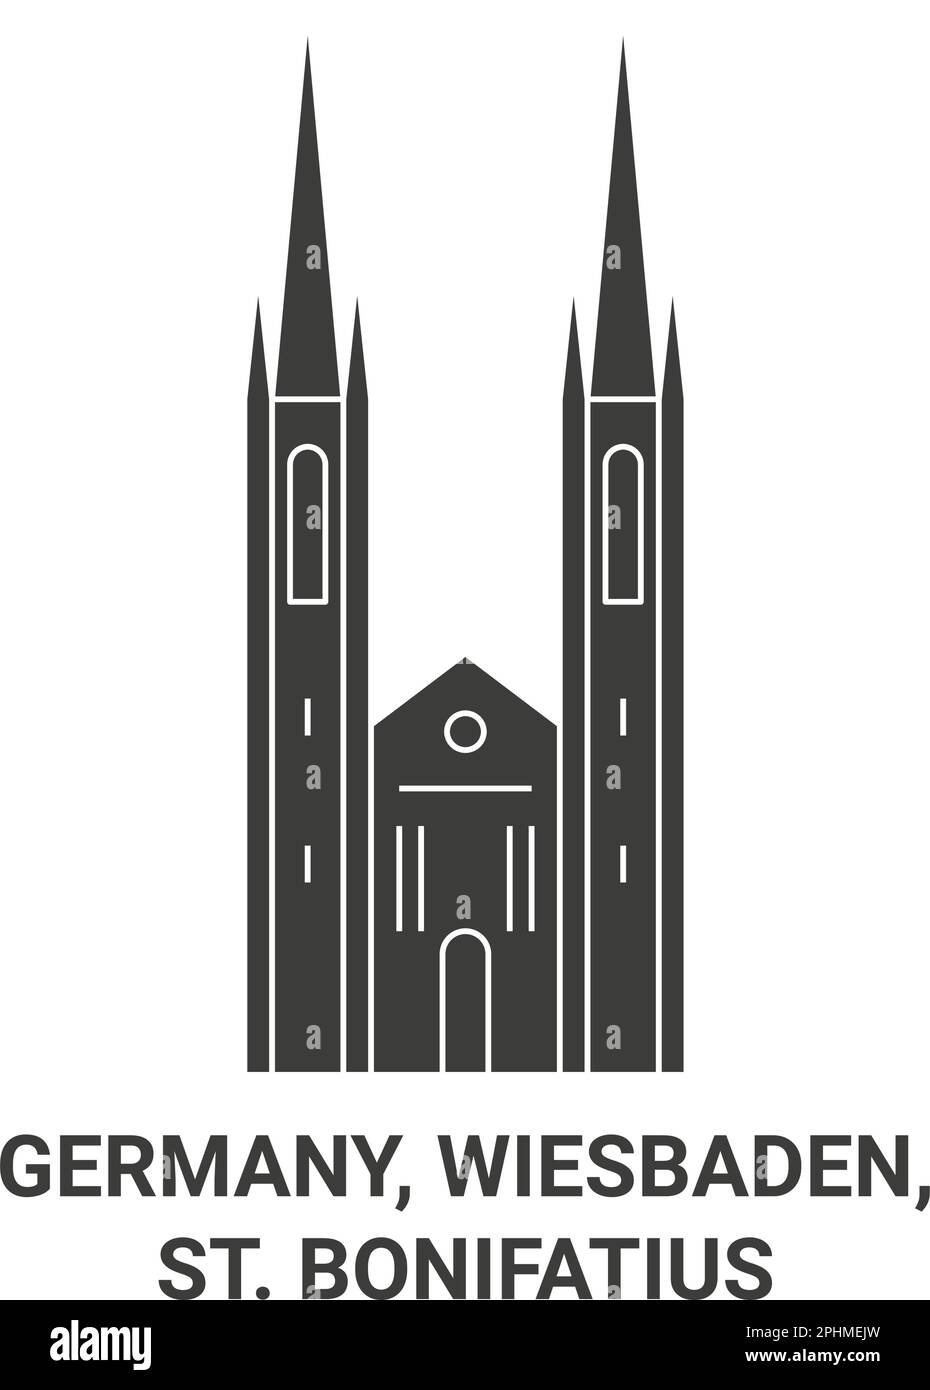 Germany, Wiesbaden, St. Bonifatius travel landmark vector illustration Stock Vector